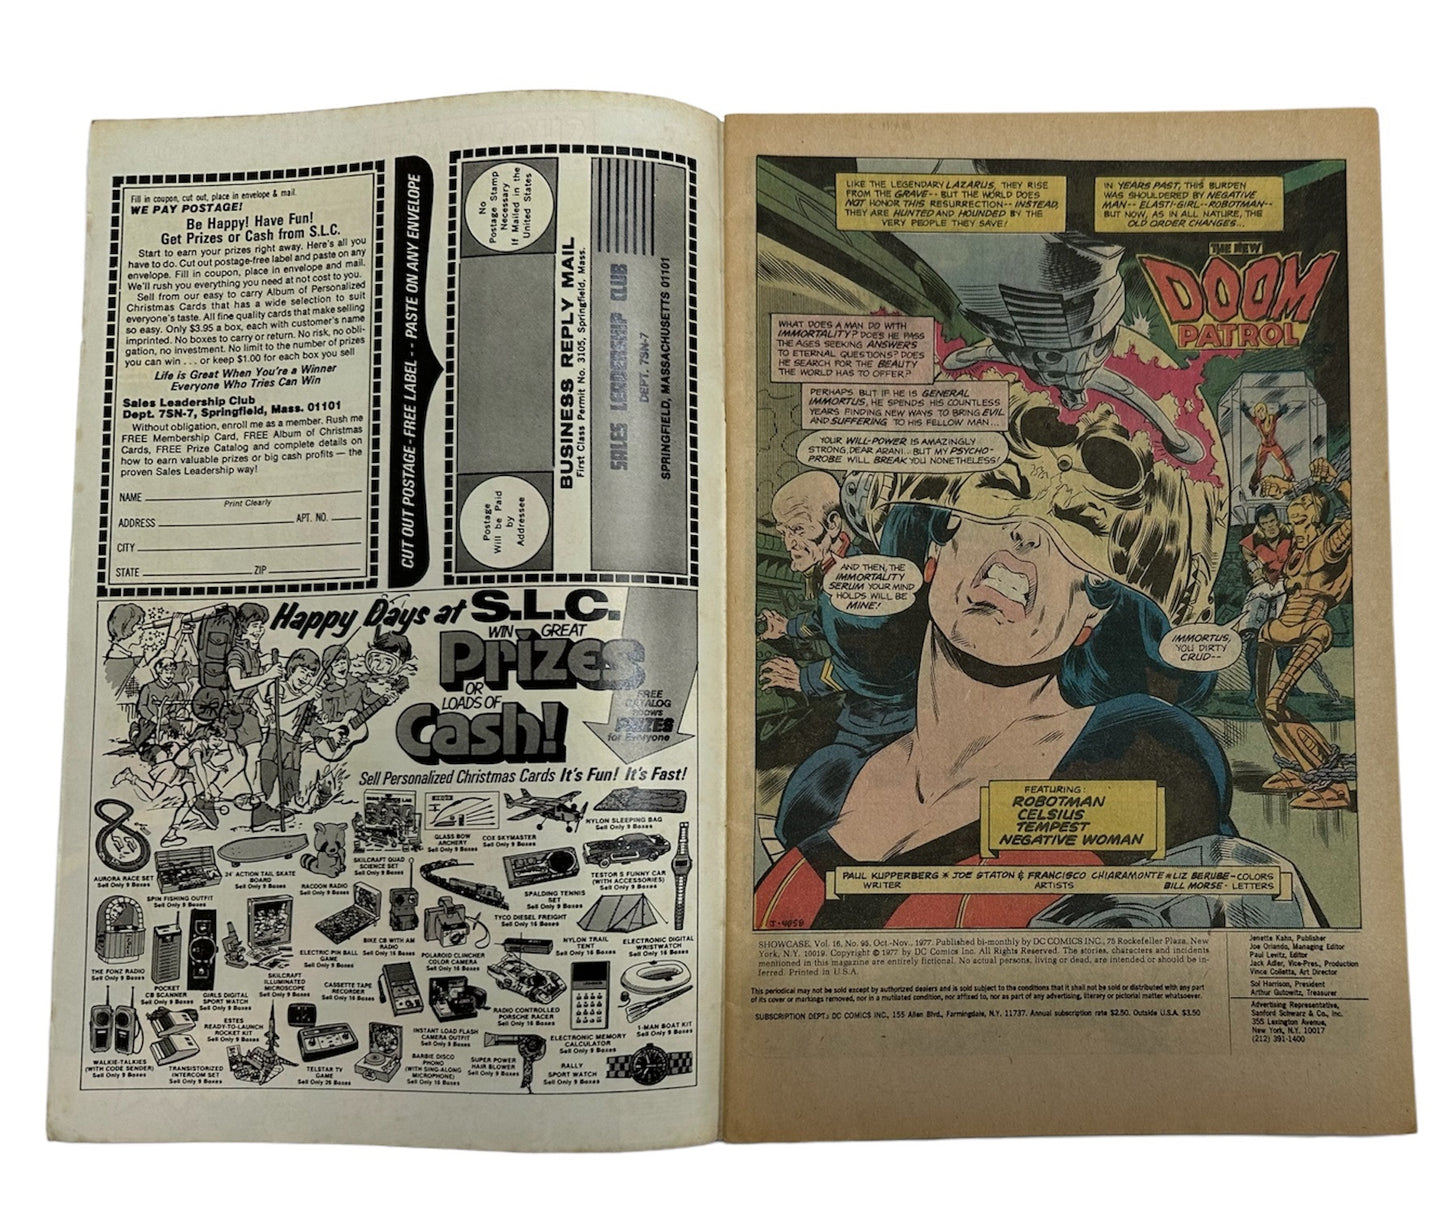 Vintage 1977 DC Showcase Presents The New Doom Patrol Comic Issue Number 95 - Featuring Robotman, General Immortus, Celsius, Temptest & Negative Woman - Very Good Condition Vintage Comic